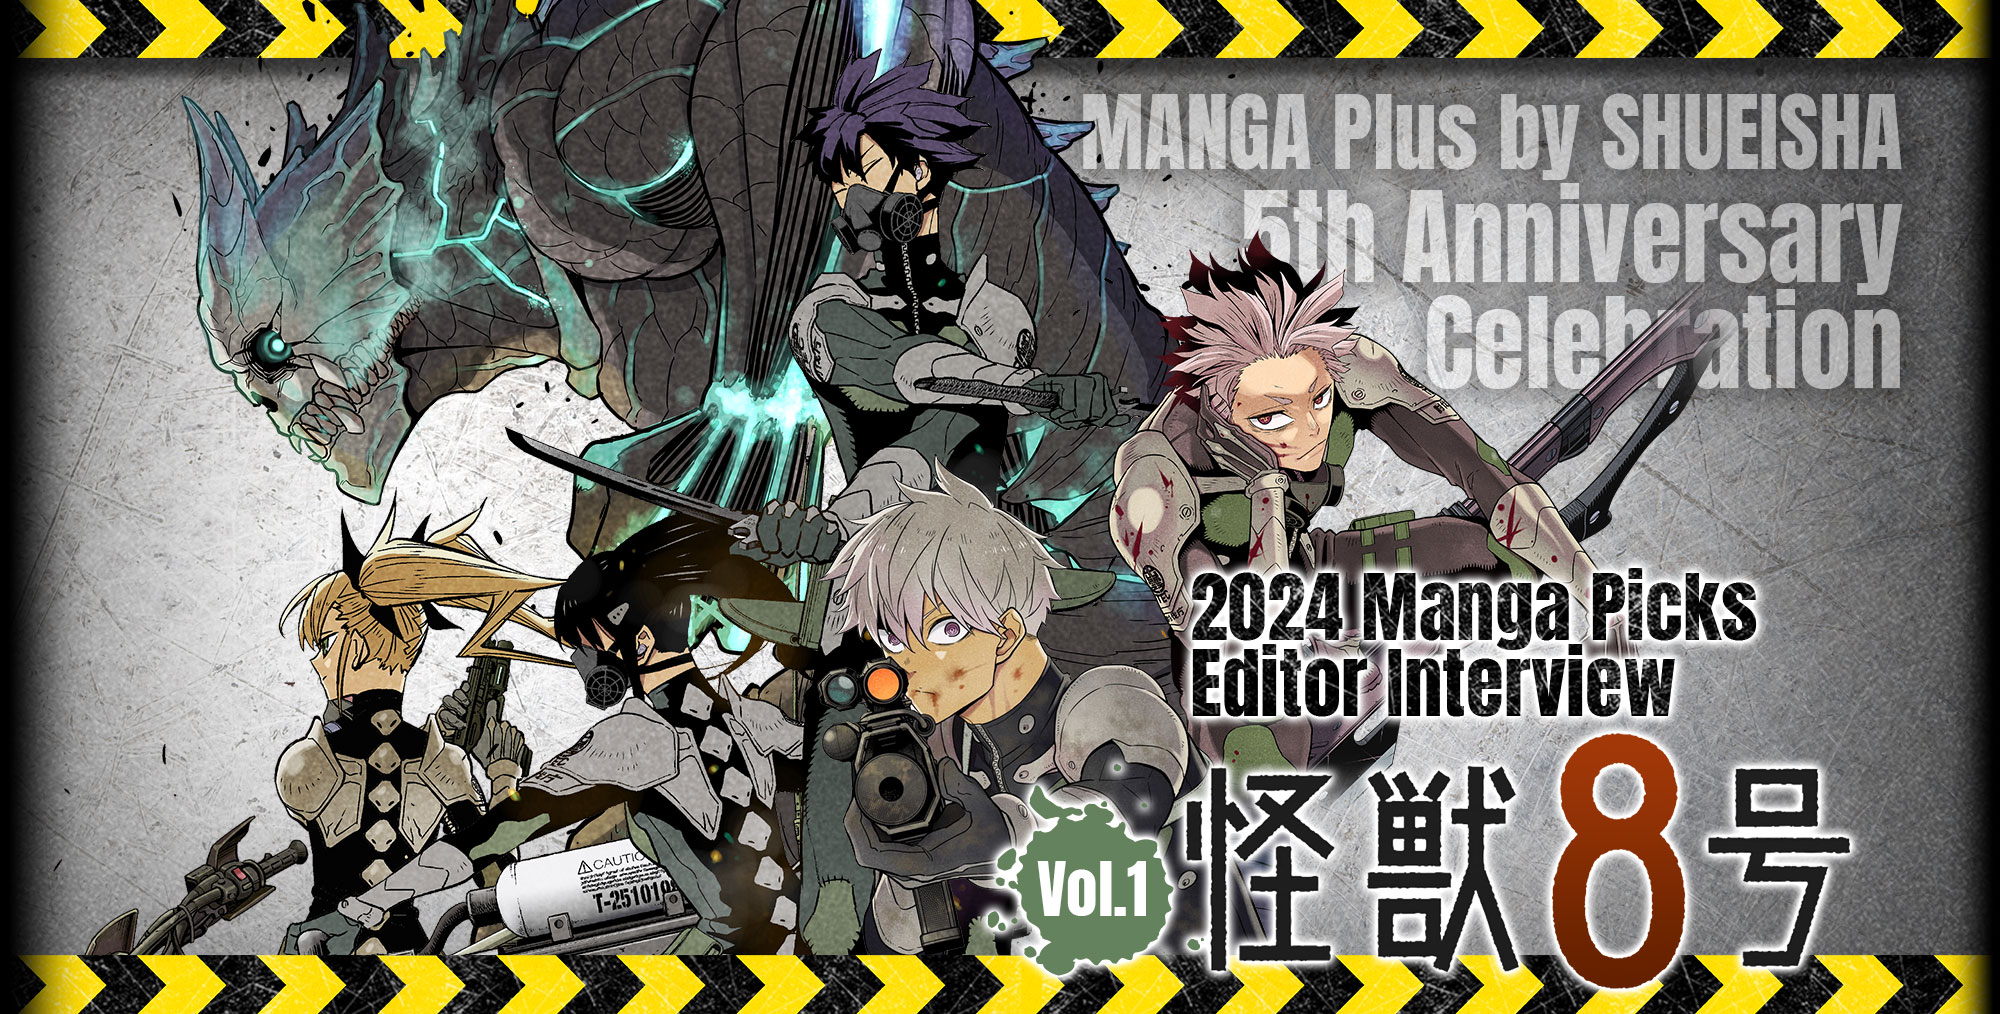 2024 Manga Picks: Editor Interview Vol. 1 “KAIJU NO.8 (Monster #8)”